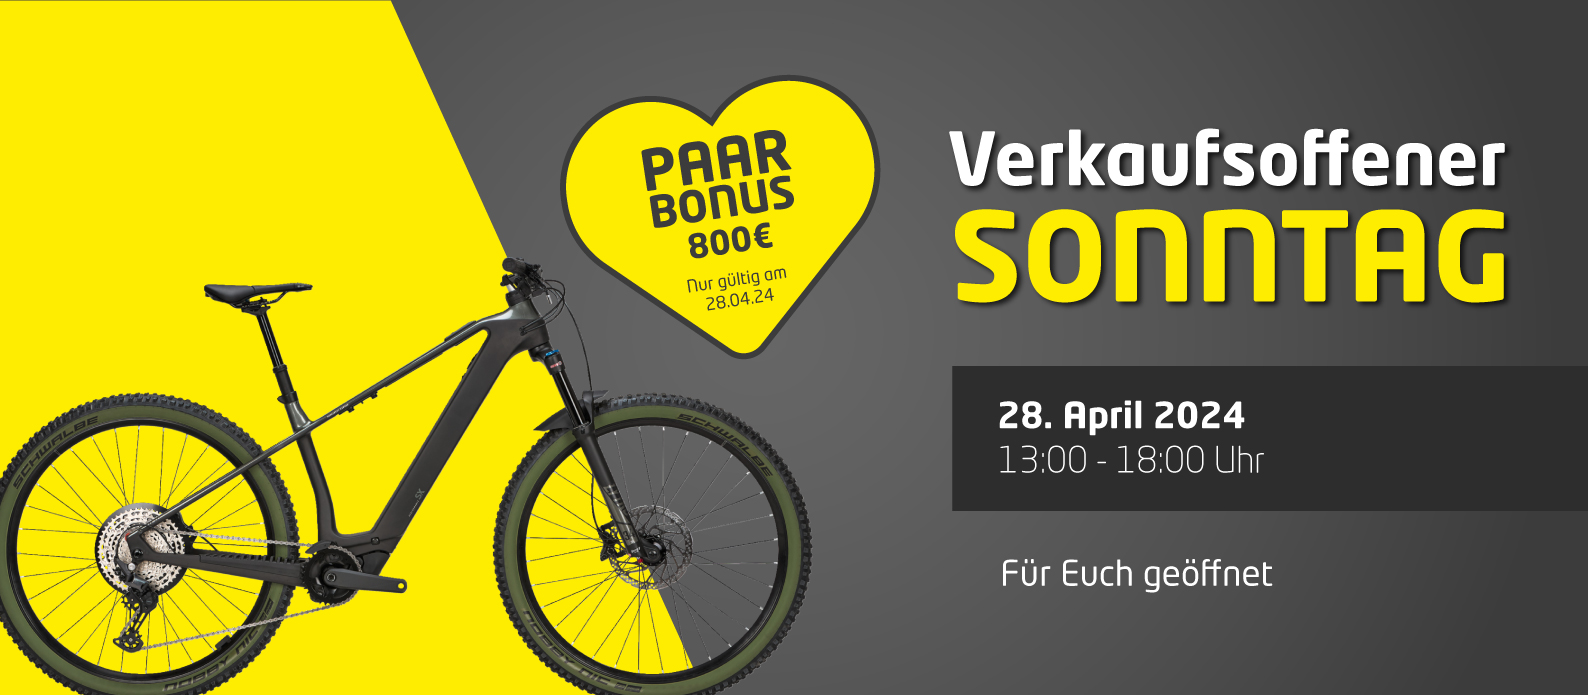 Verkaufsoffener Sonntag bei Fahrrad Nerz am 28. April 2024